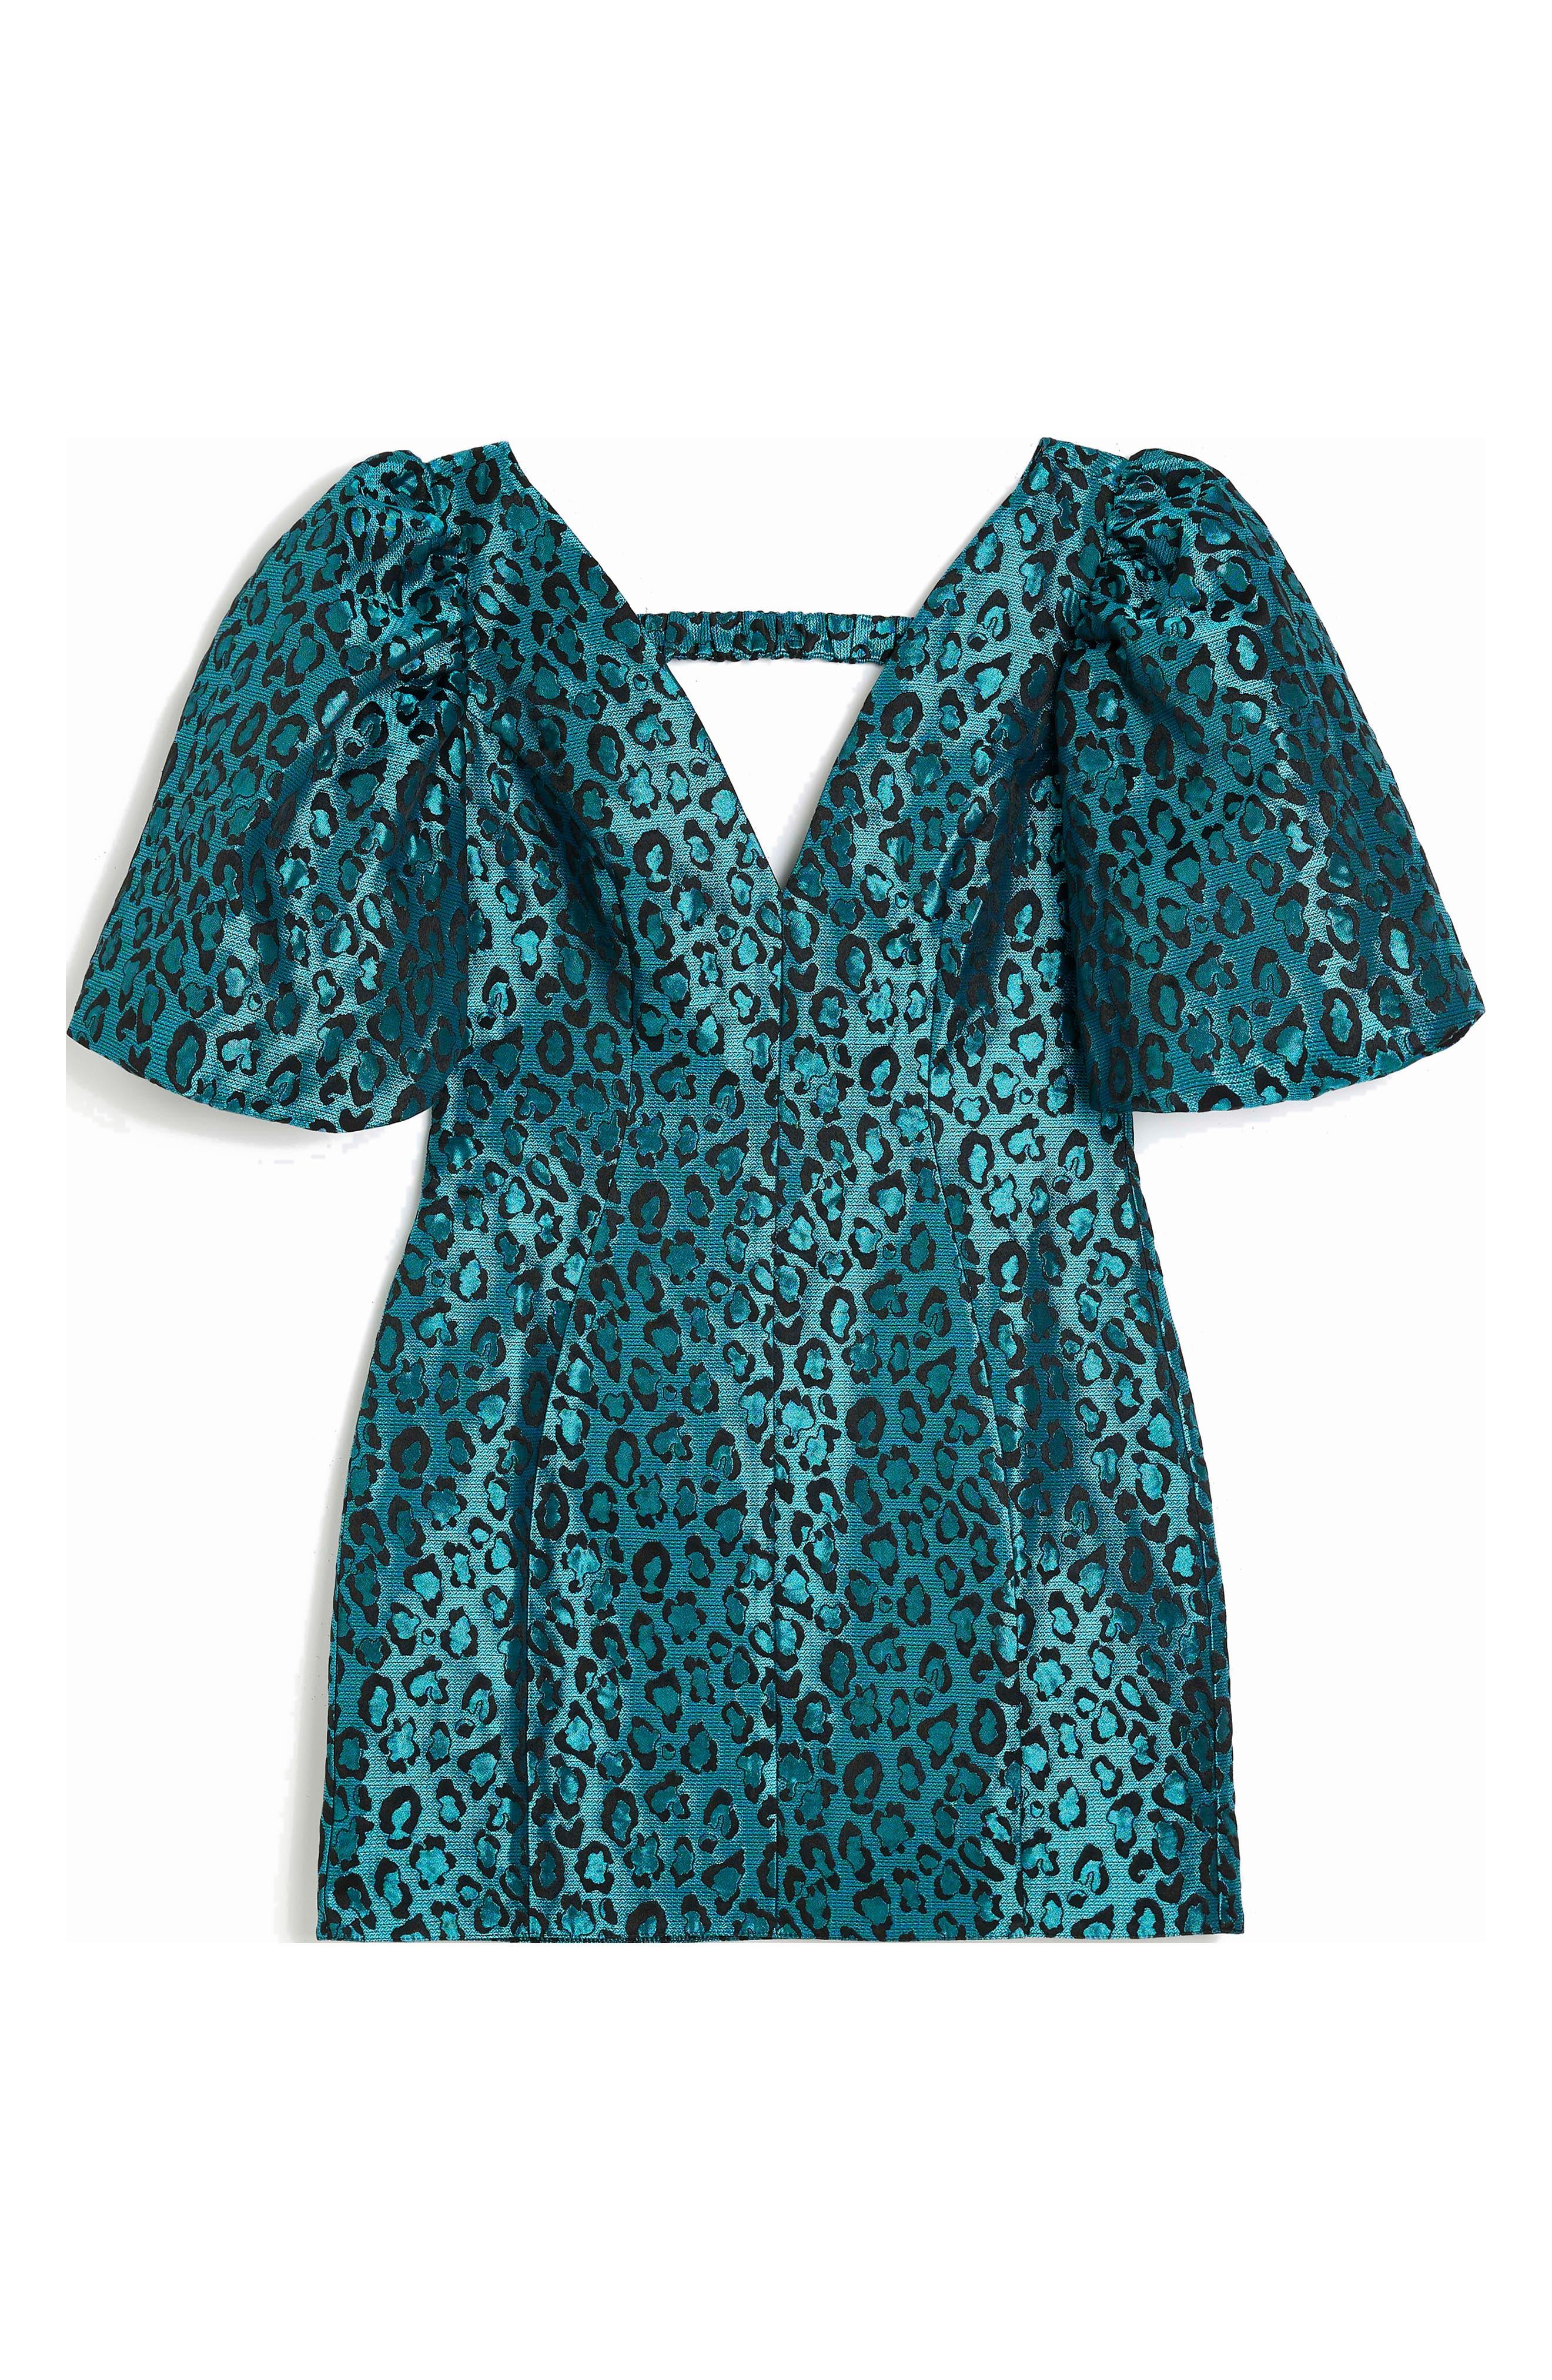 River Island Celia Leopard Jacquard Puff Sleeve Minidress in Blue | Lyst